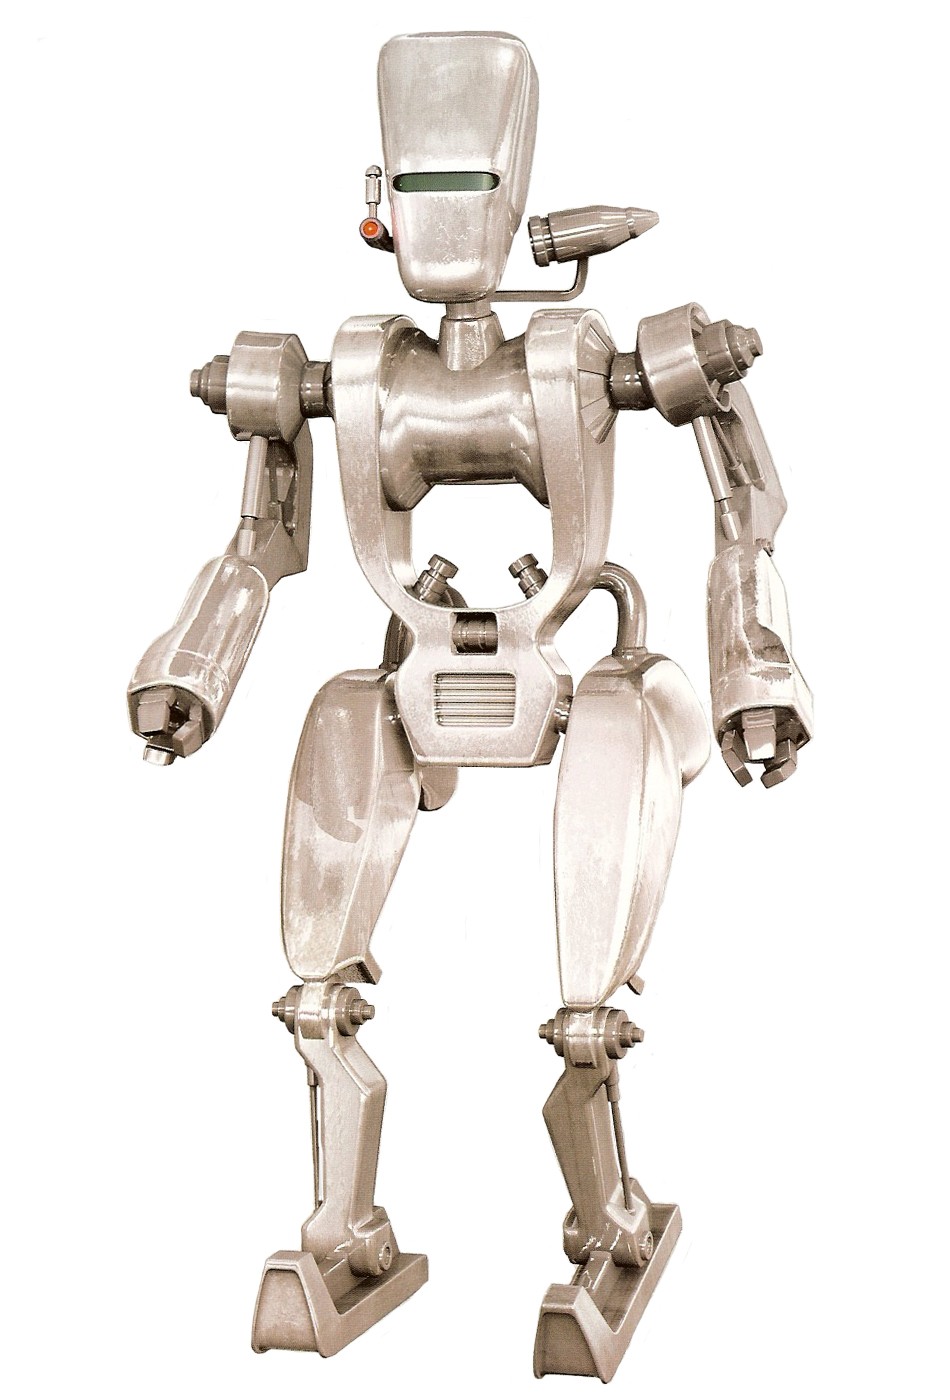 Industrial Automaton ASP-series Labor droid